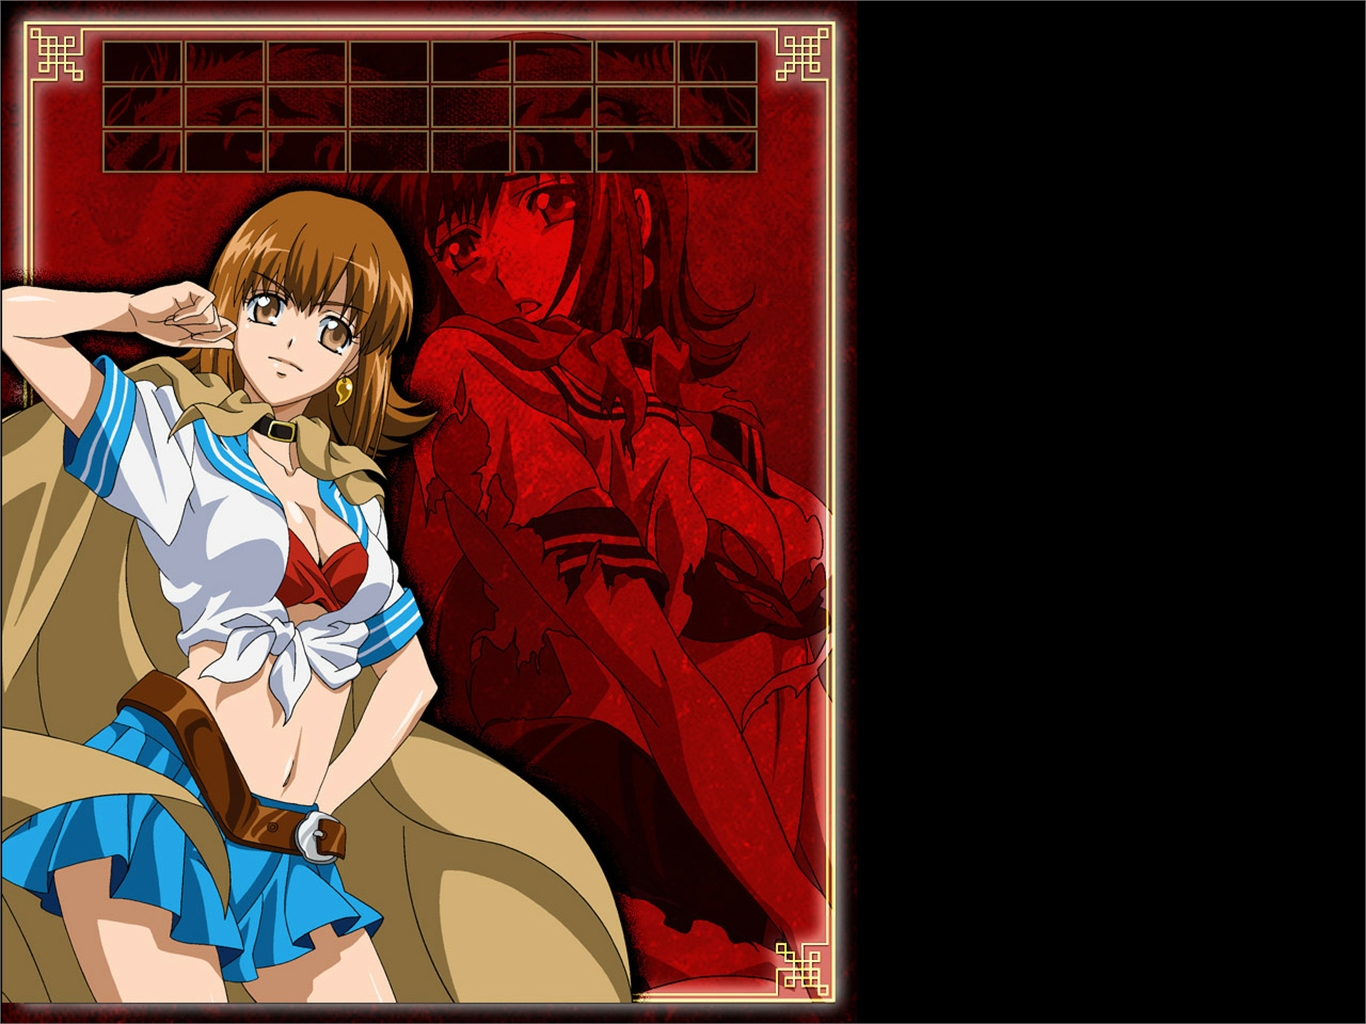 Shin Ikkitousen  Anime wallpaper, Preppy wallpaper, Dota 2 wallpaper